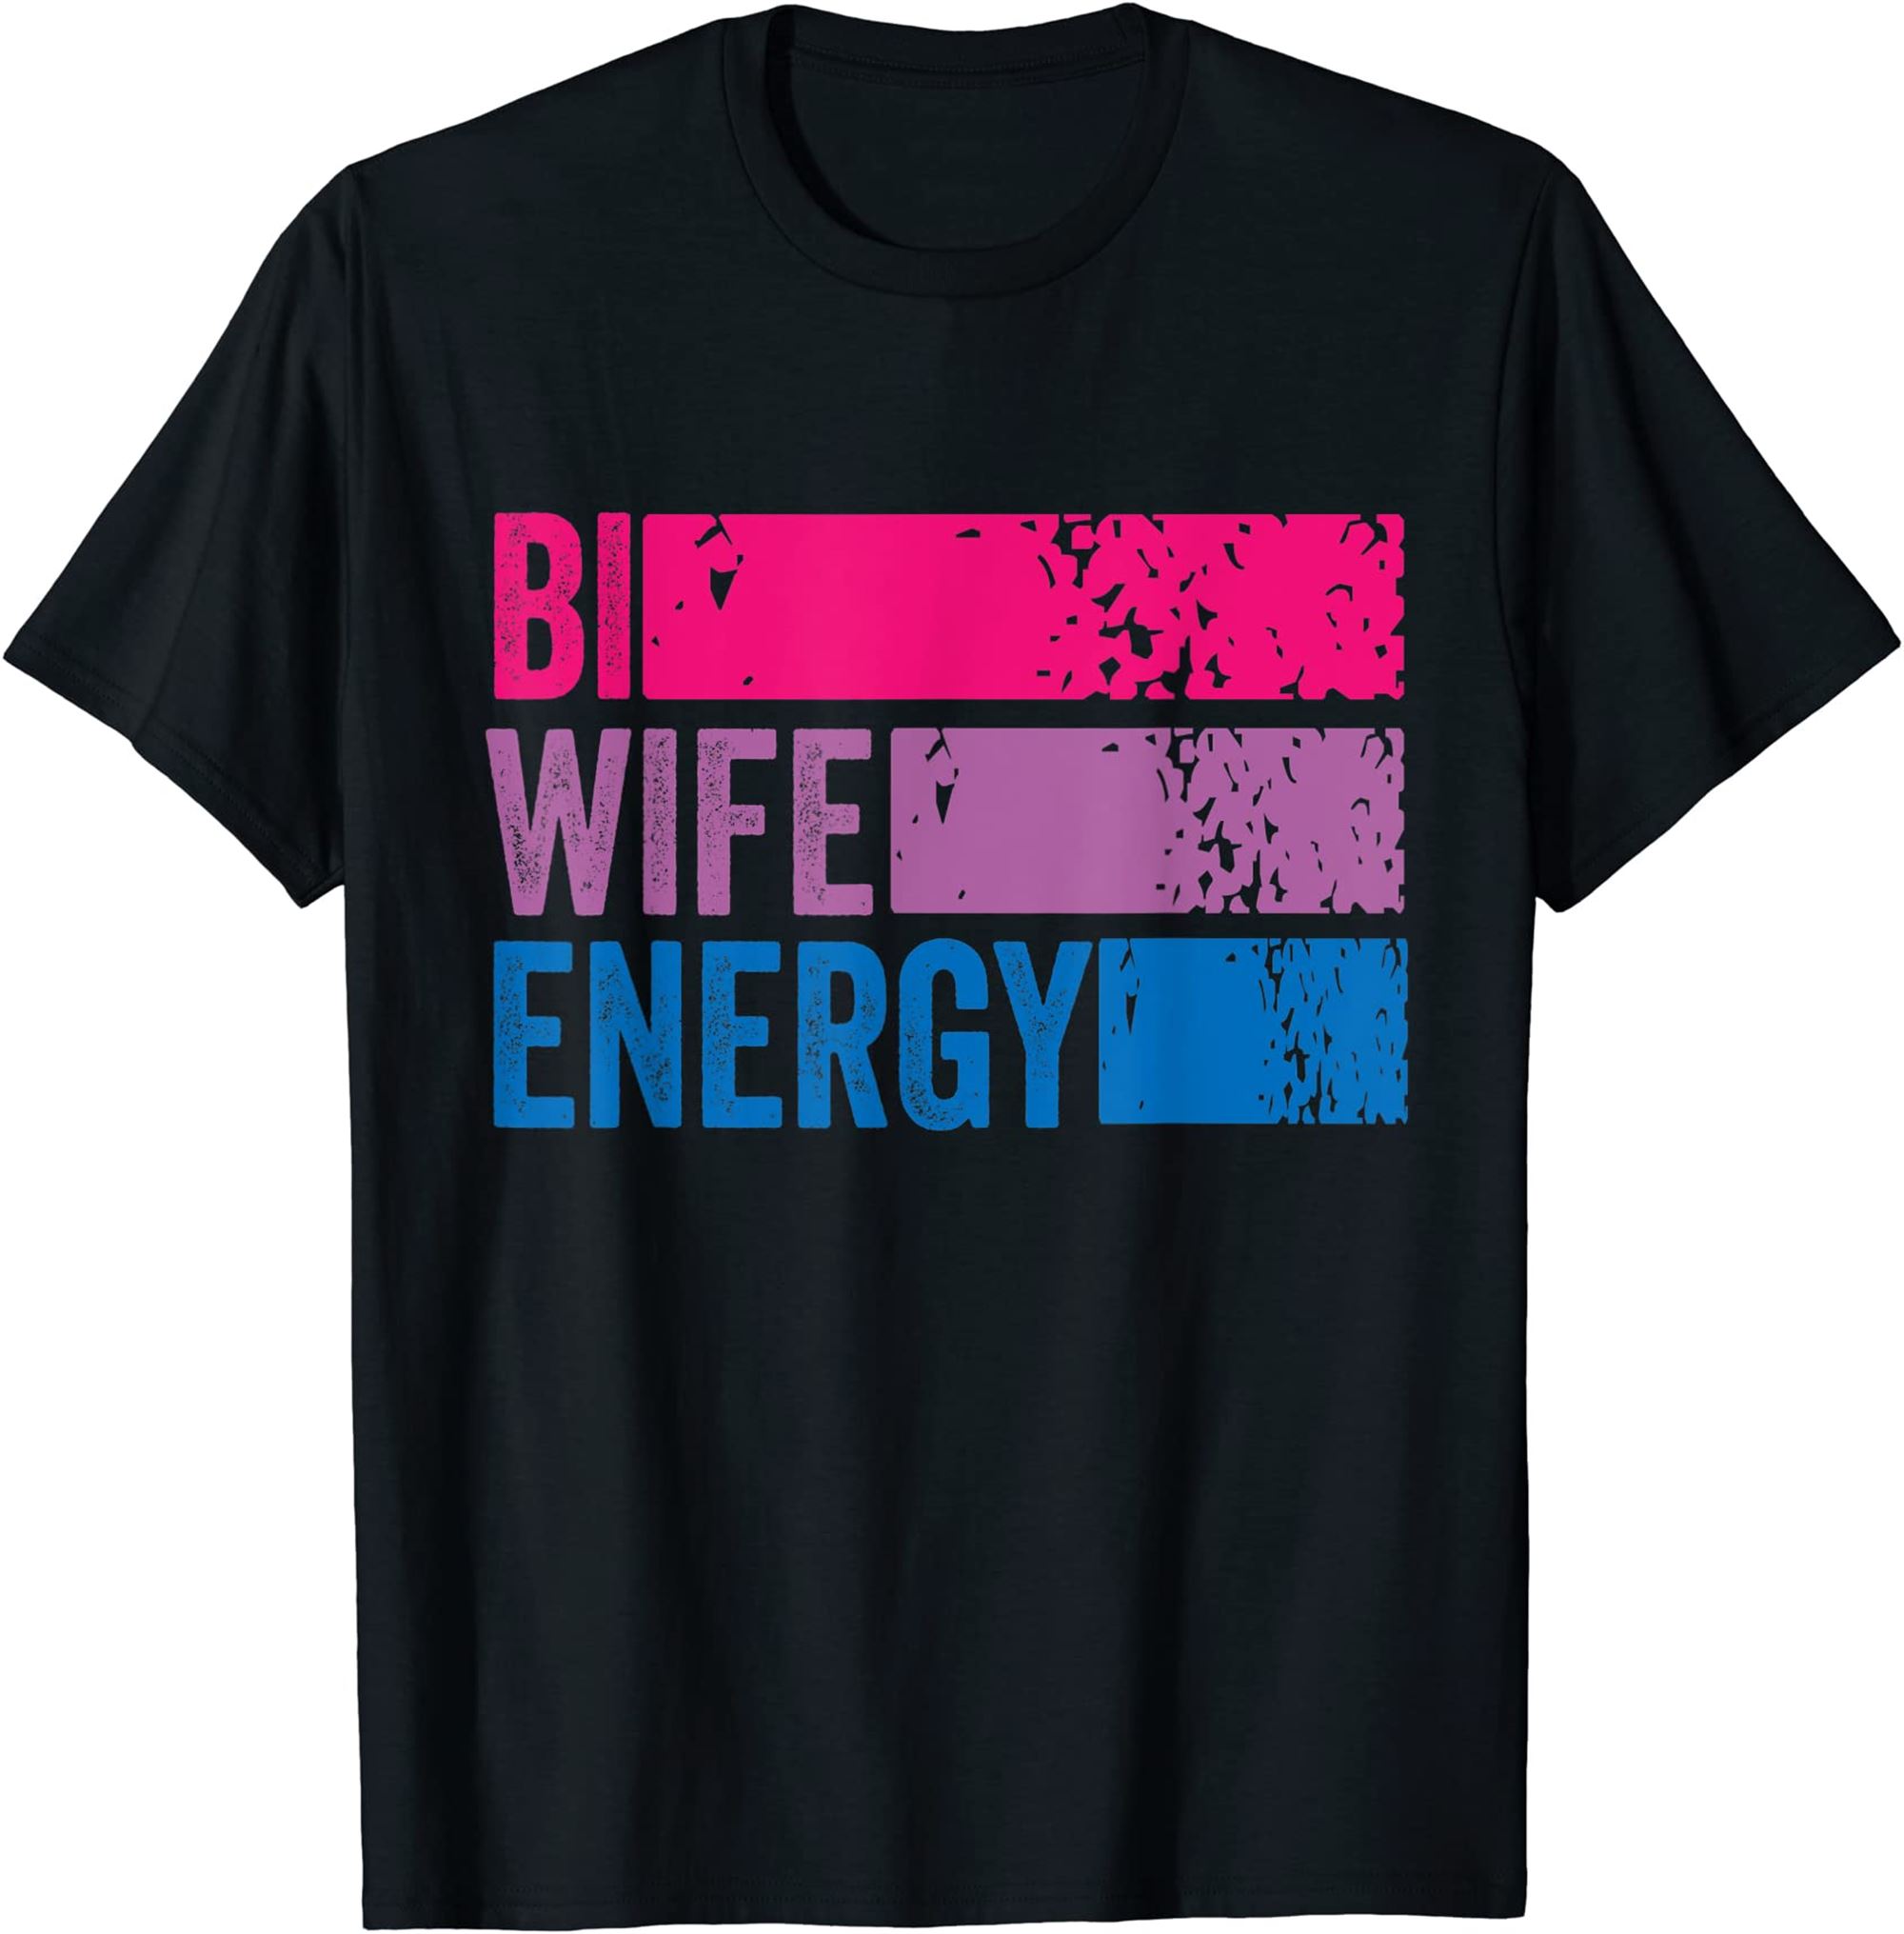 Bi Wife Energy Lgbtq T Shirt Full Size Up To 5xl